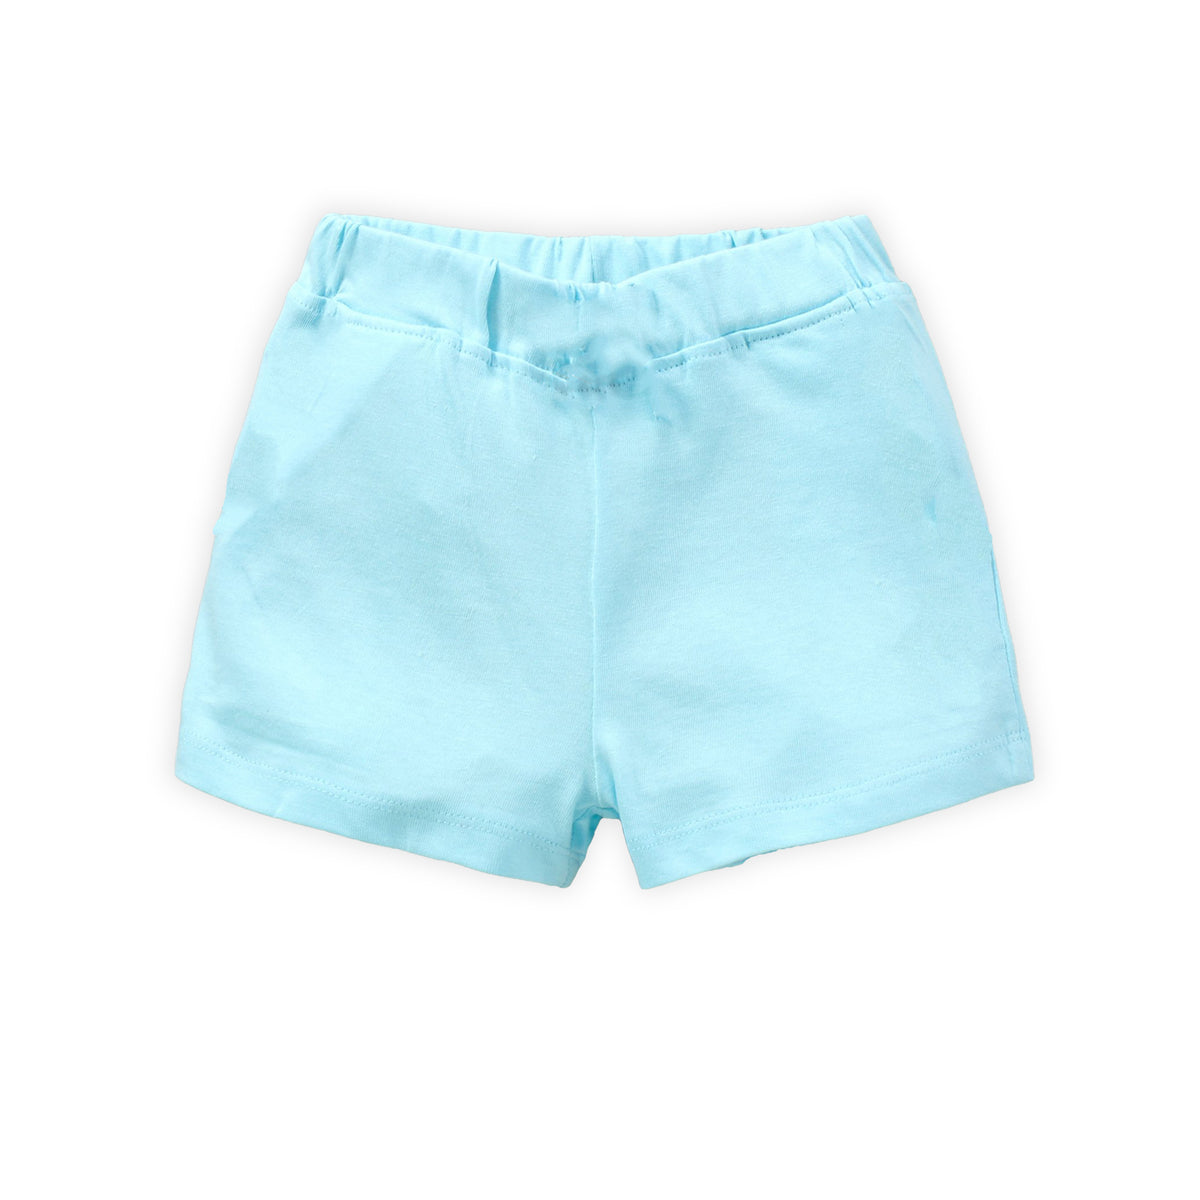 Kids sky blue Solid Cotton Shorts